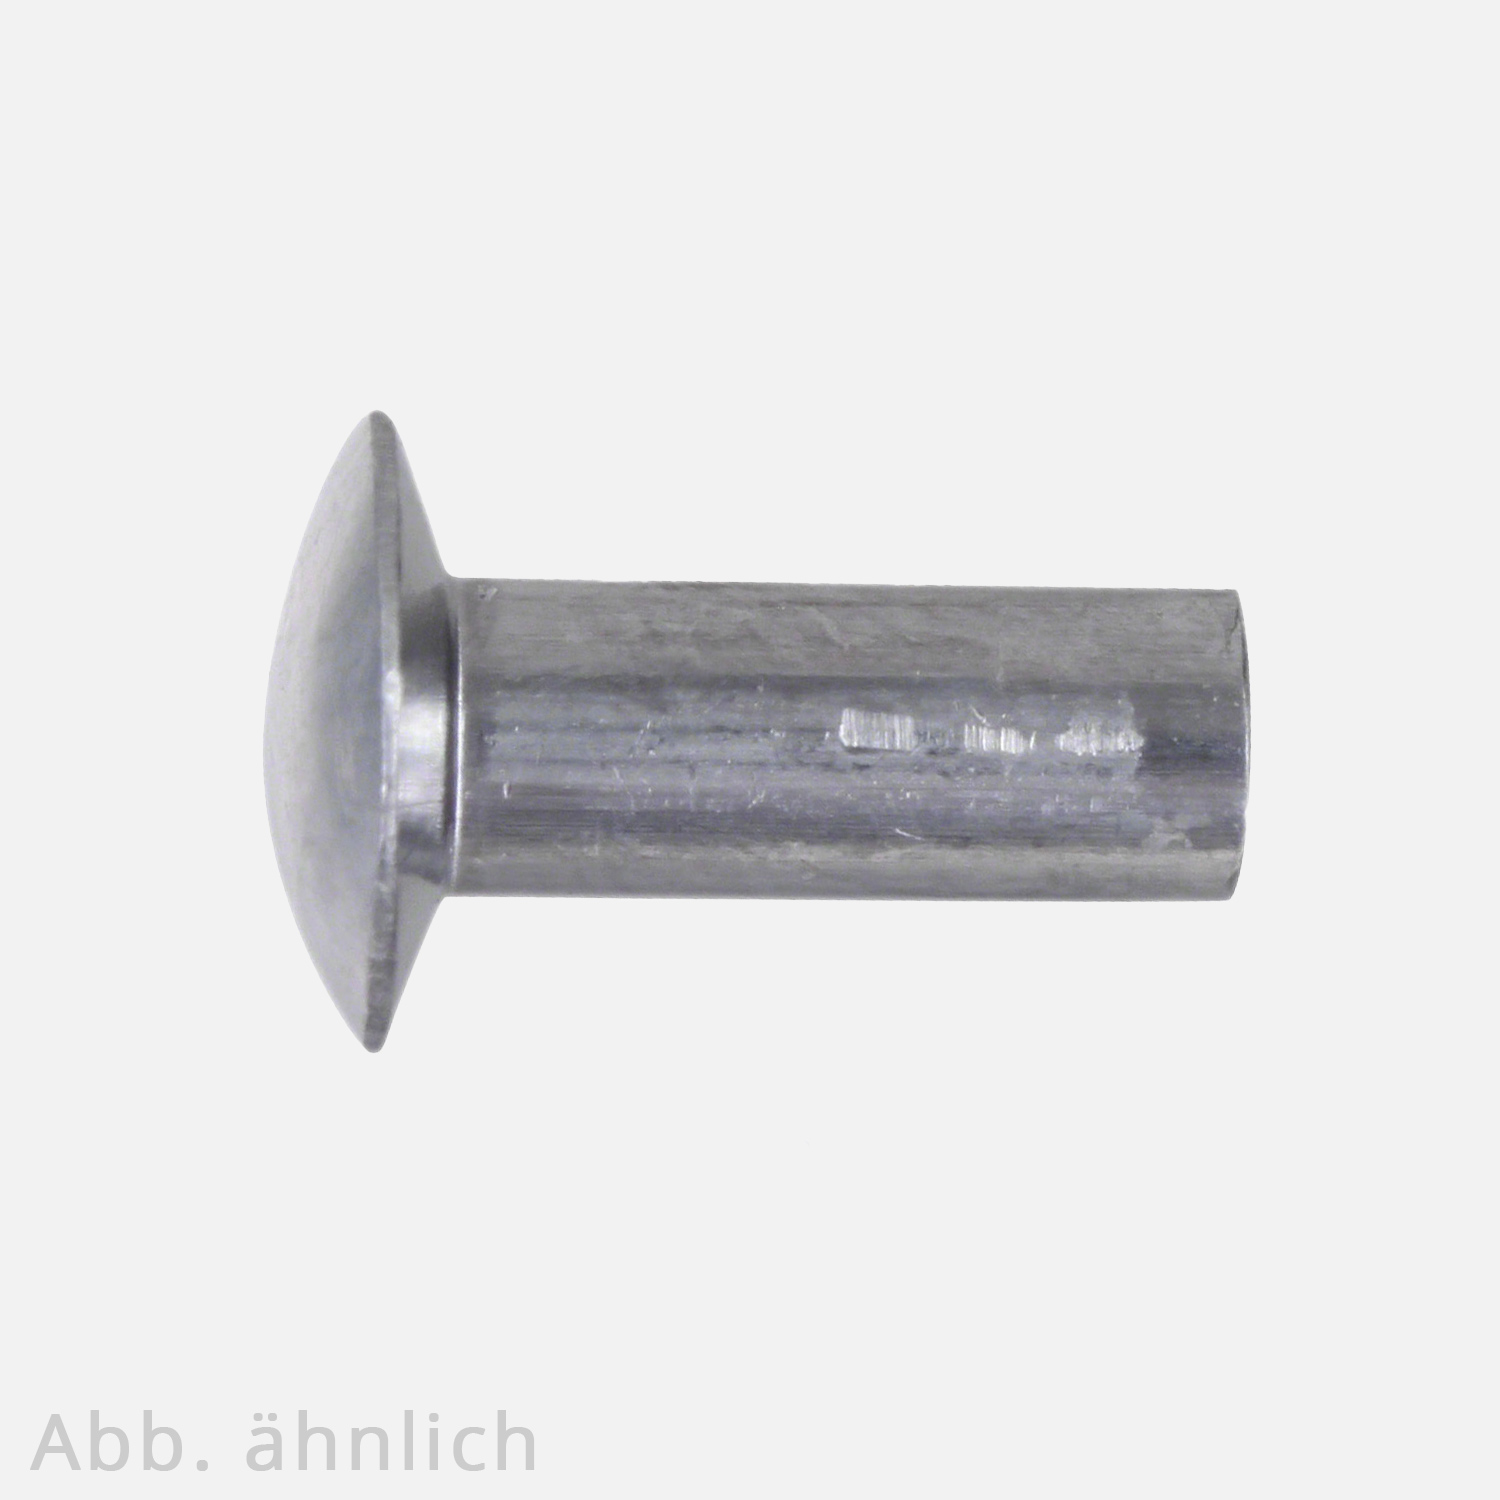 1000 Linsennieten 4x8 mm - DIN 662 - Aluminium 99.5